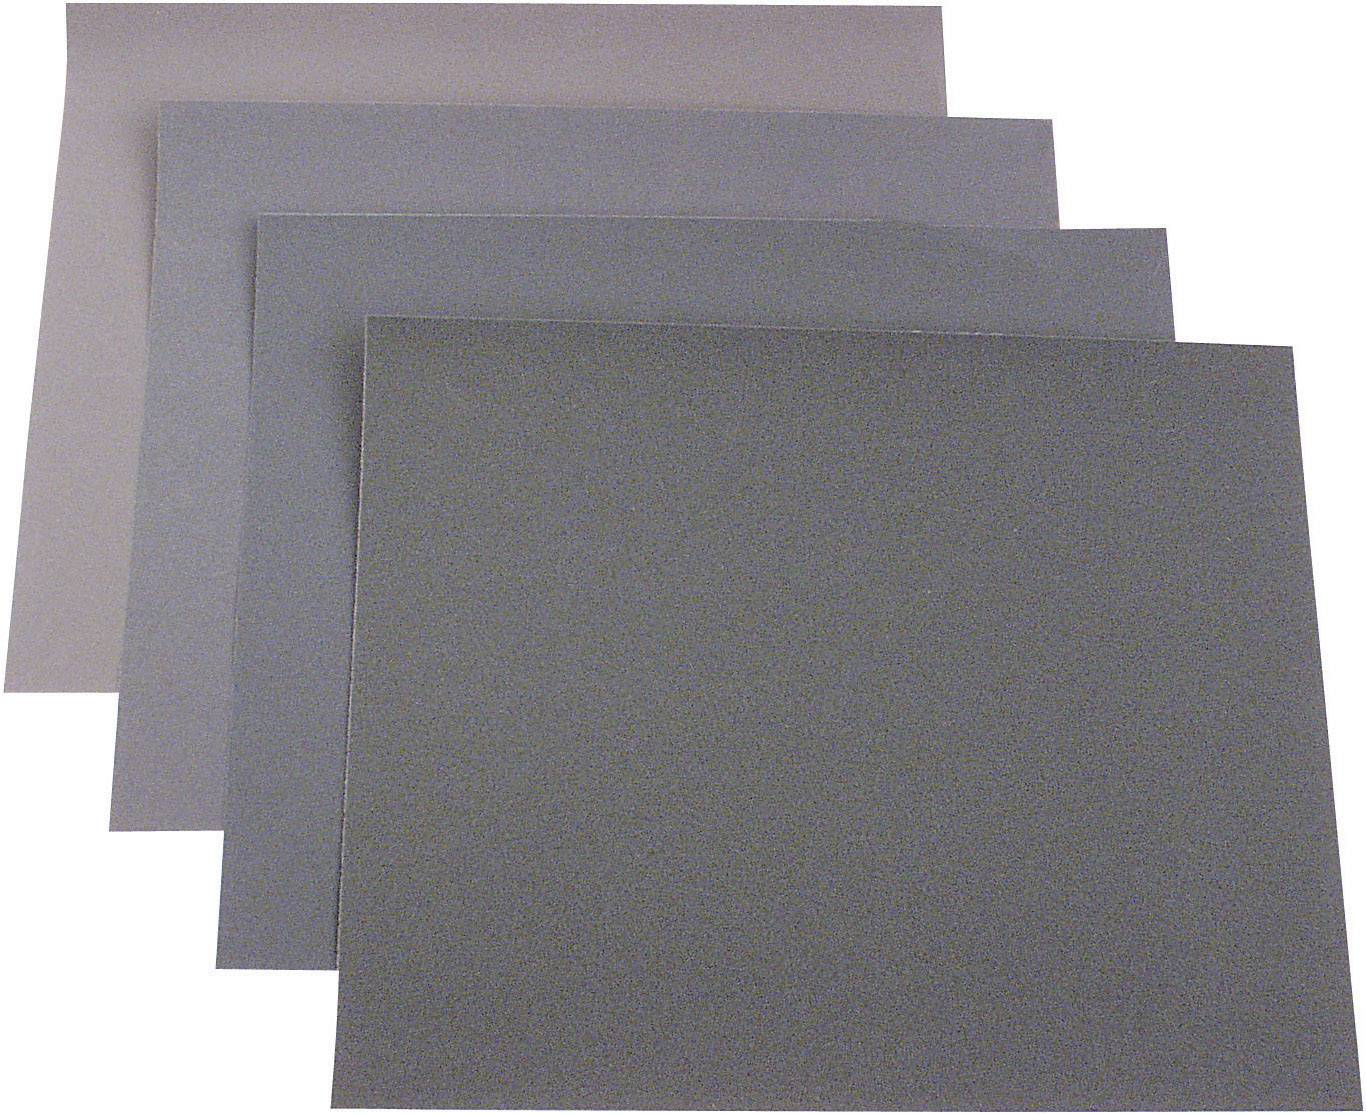 Sand Paper Sheets Fit Silverline SL-8 8"x 20-1/8" VASL 36 50 per pack 